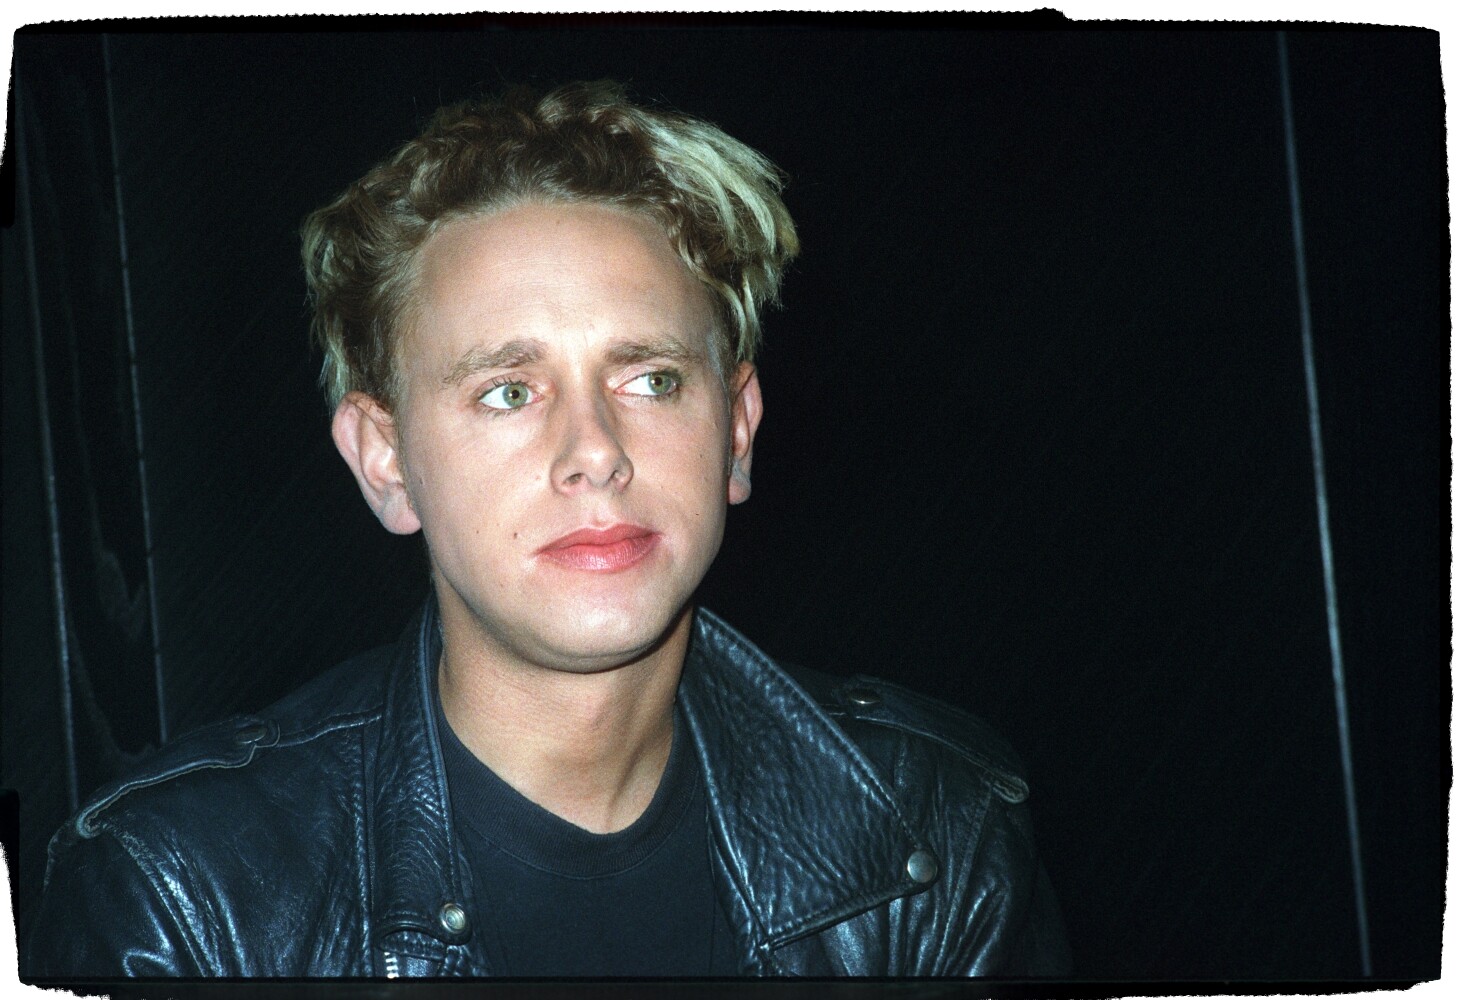 Depeche Mode / Martin L. Gore 31.08.1987 I N 1 (Rita Maier / Schwules Museum Berlin RR-P)